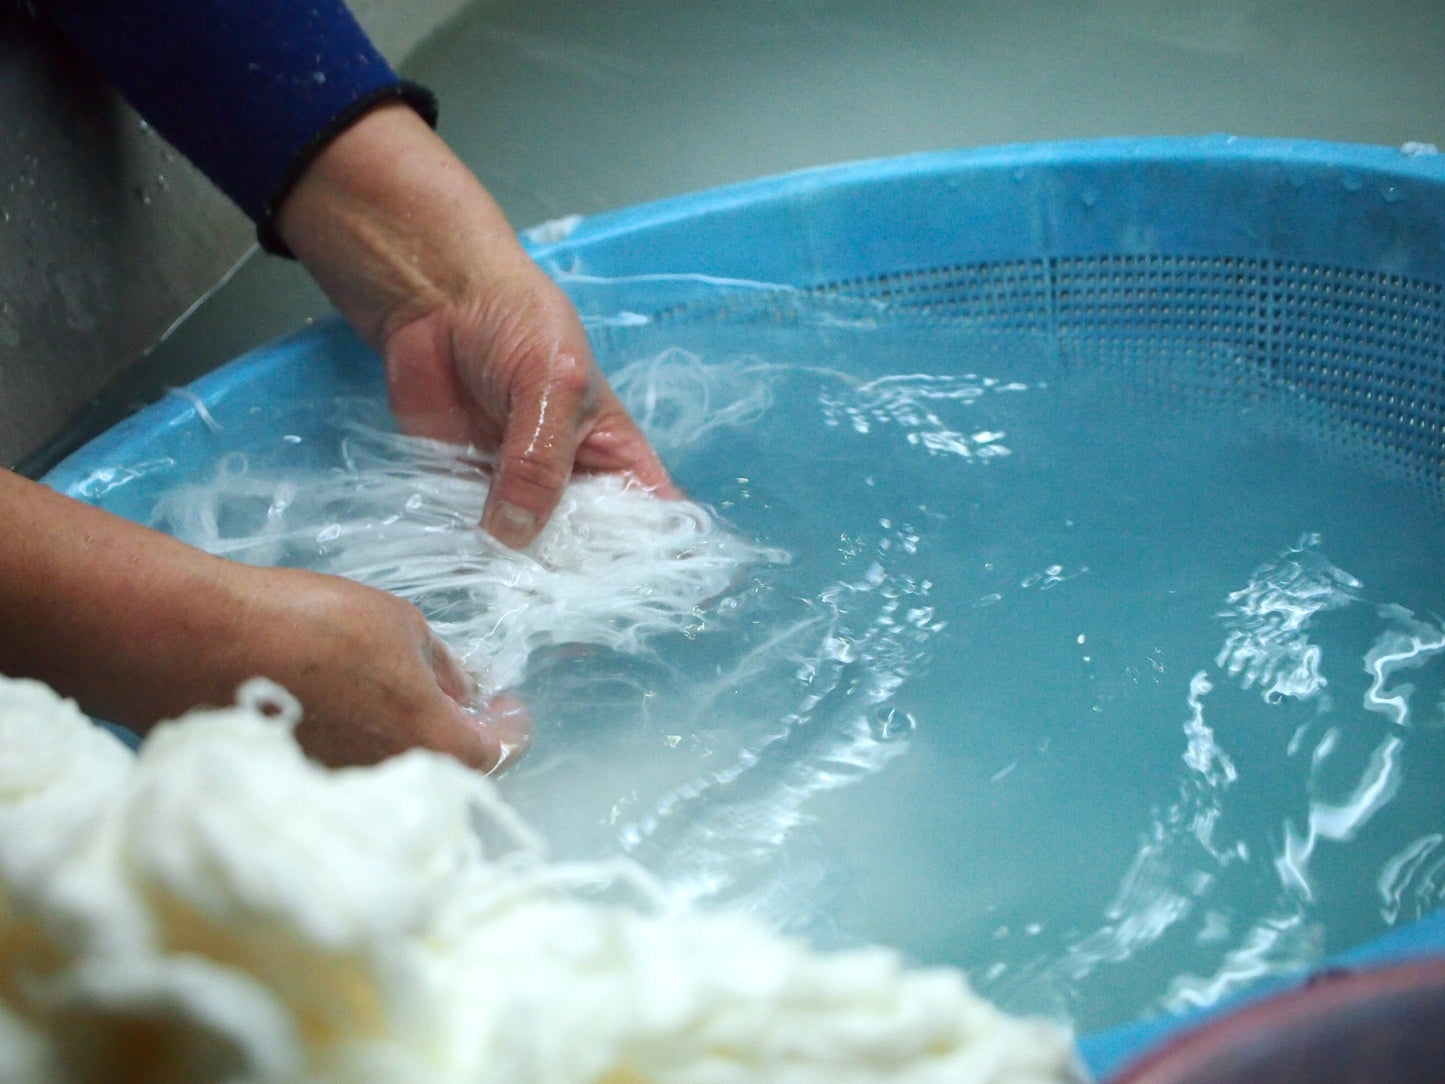 Awagami Factory artisan washing kozo fibres in water